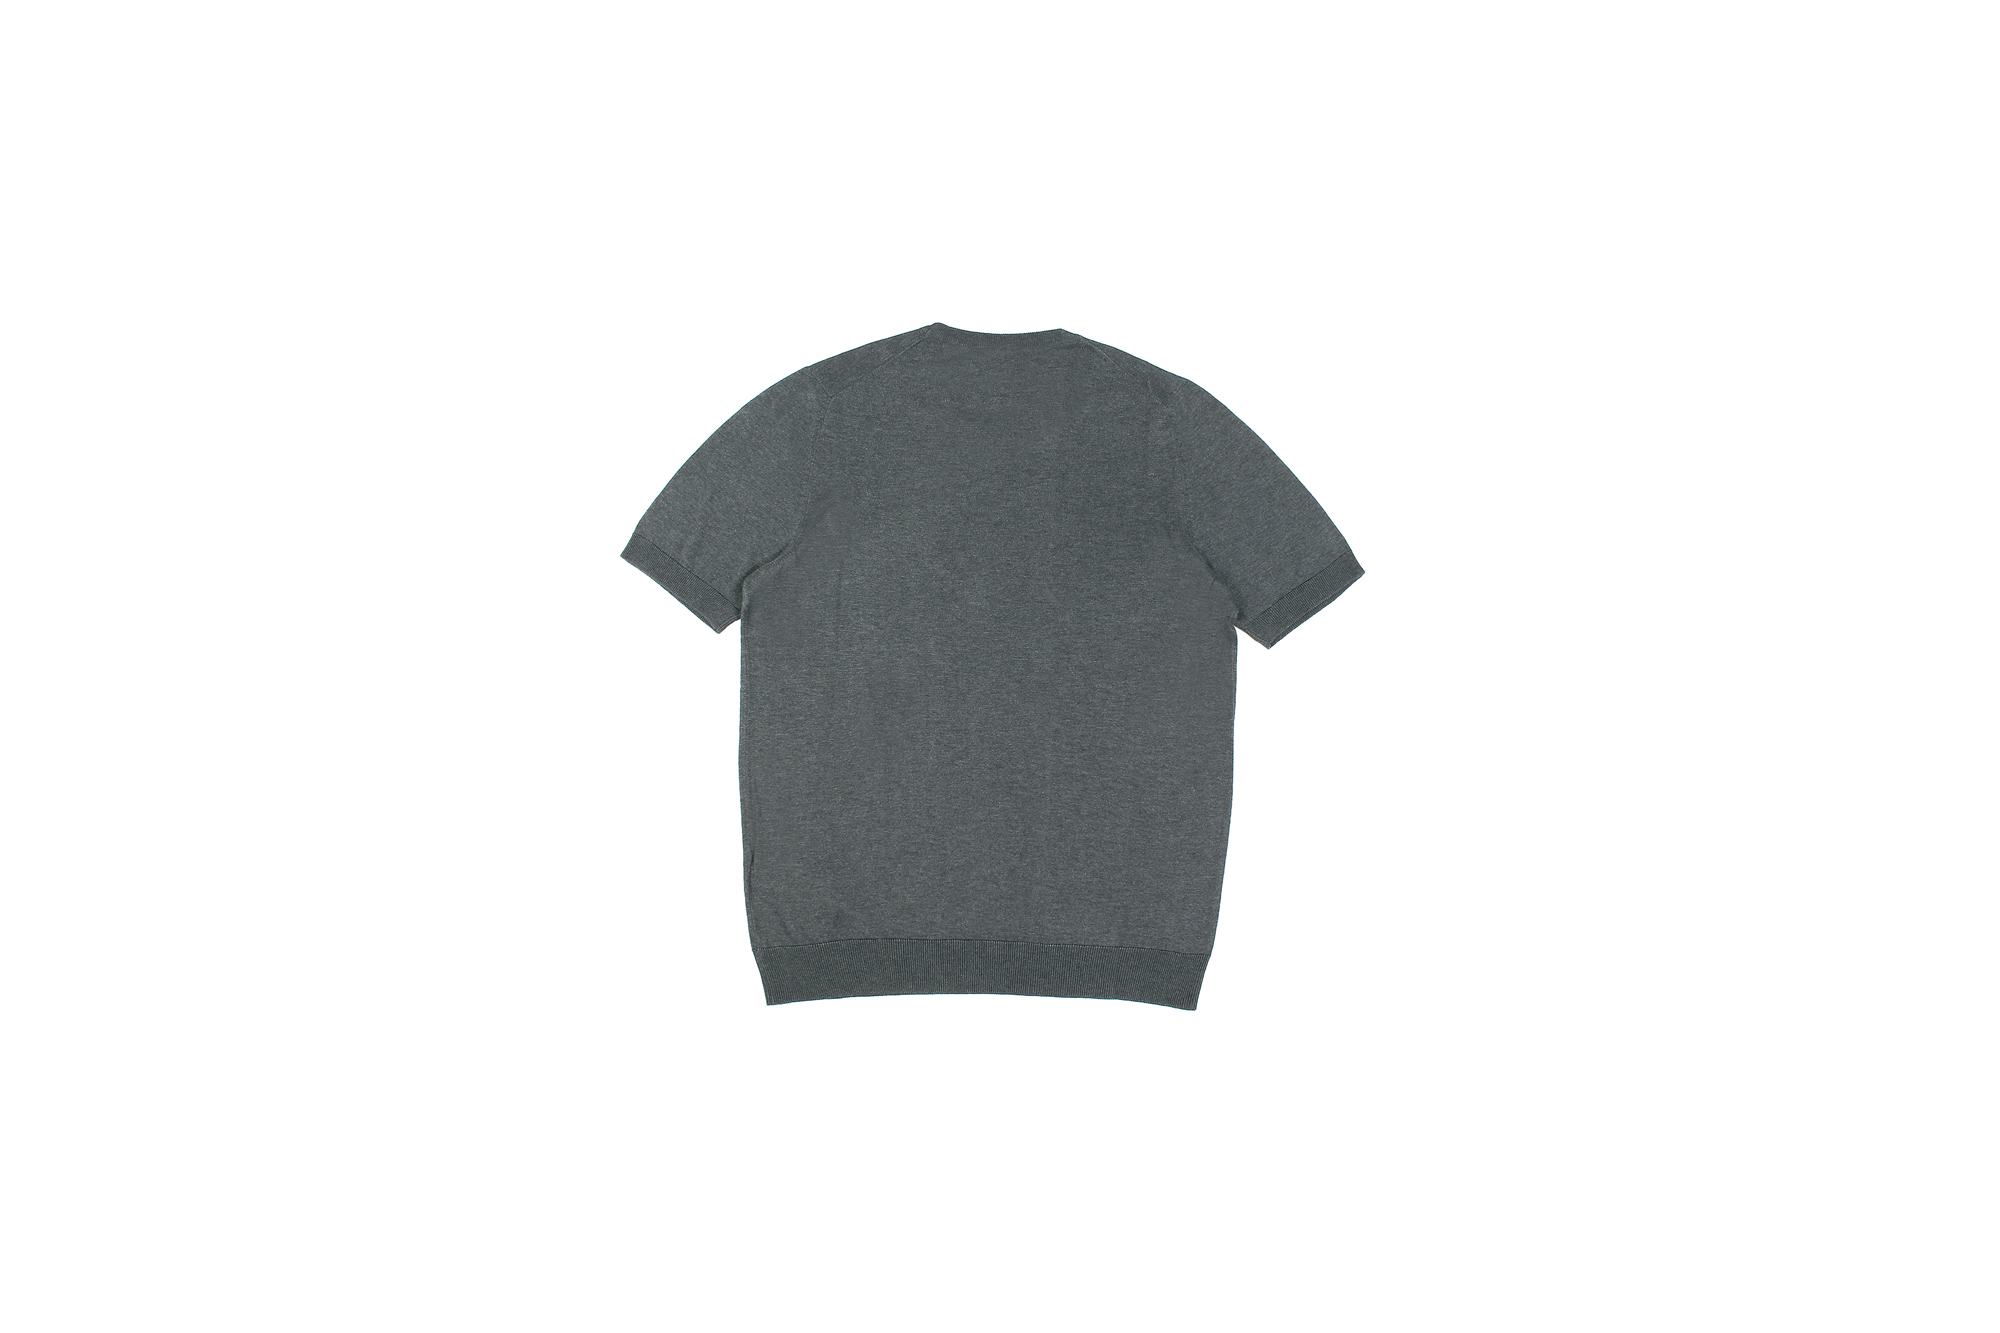 Gran Sasso (グランサッソ) Silk Knit T-shirt (シルクニット Tシャツ) SETA (シルク 100%) ショートスリーブ シルク ニット Tシャツ GREY (グレー・097)　made in italy (イタリア製) 2020 春夏新作 gransasso 愛知 名古屋 altoediritto アルトエデリット